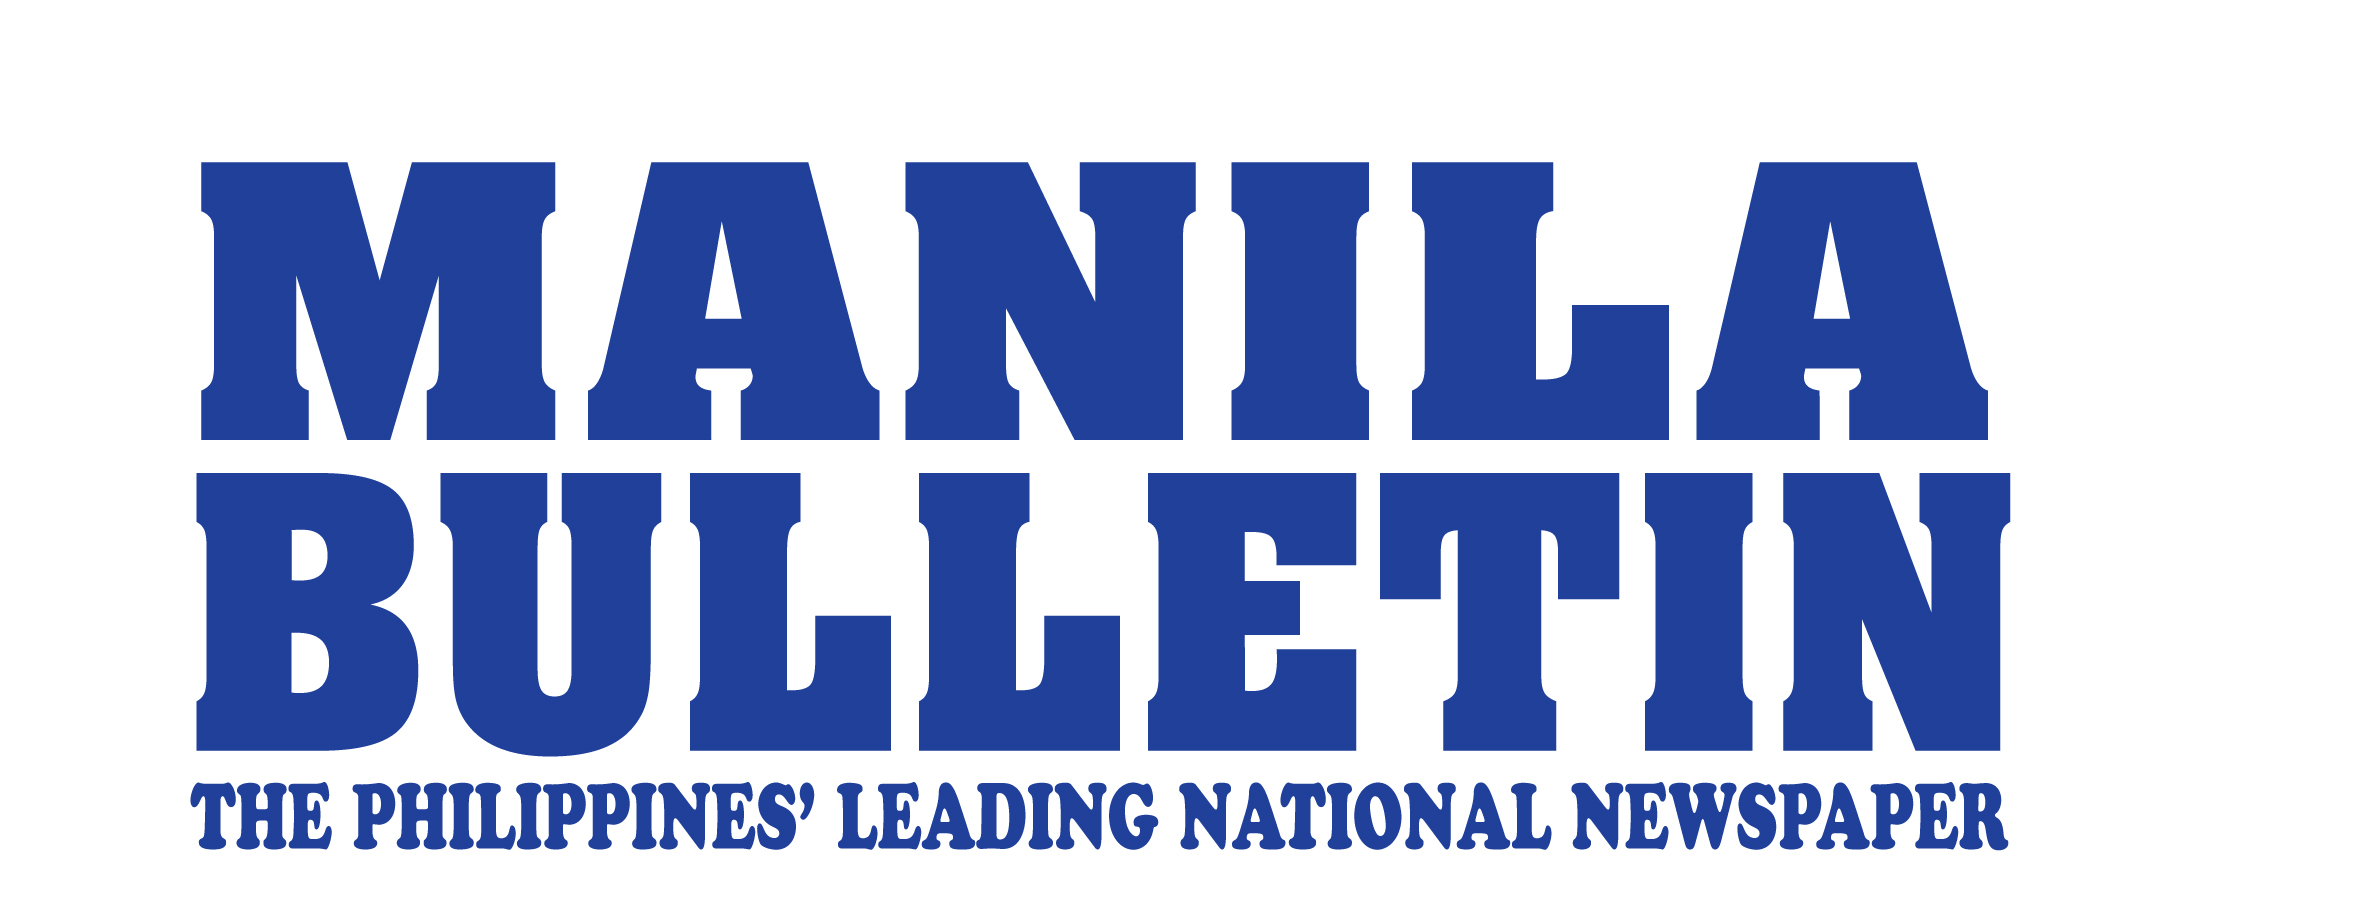 Manila Bulletin logo